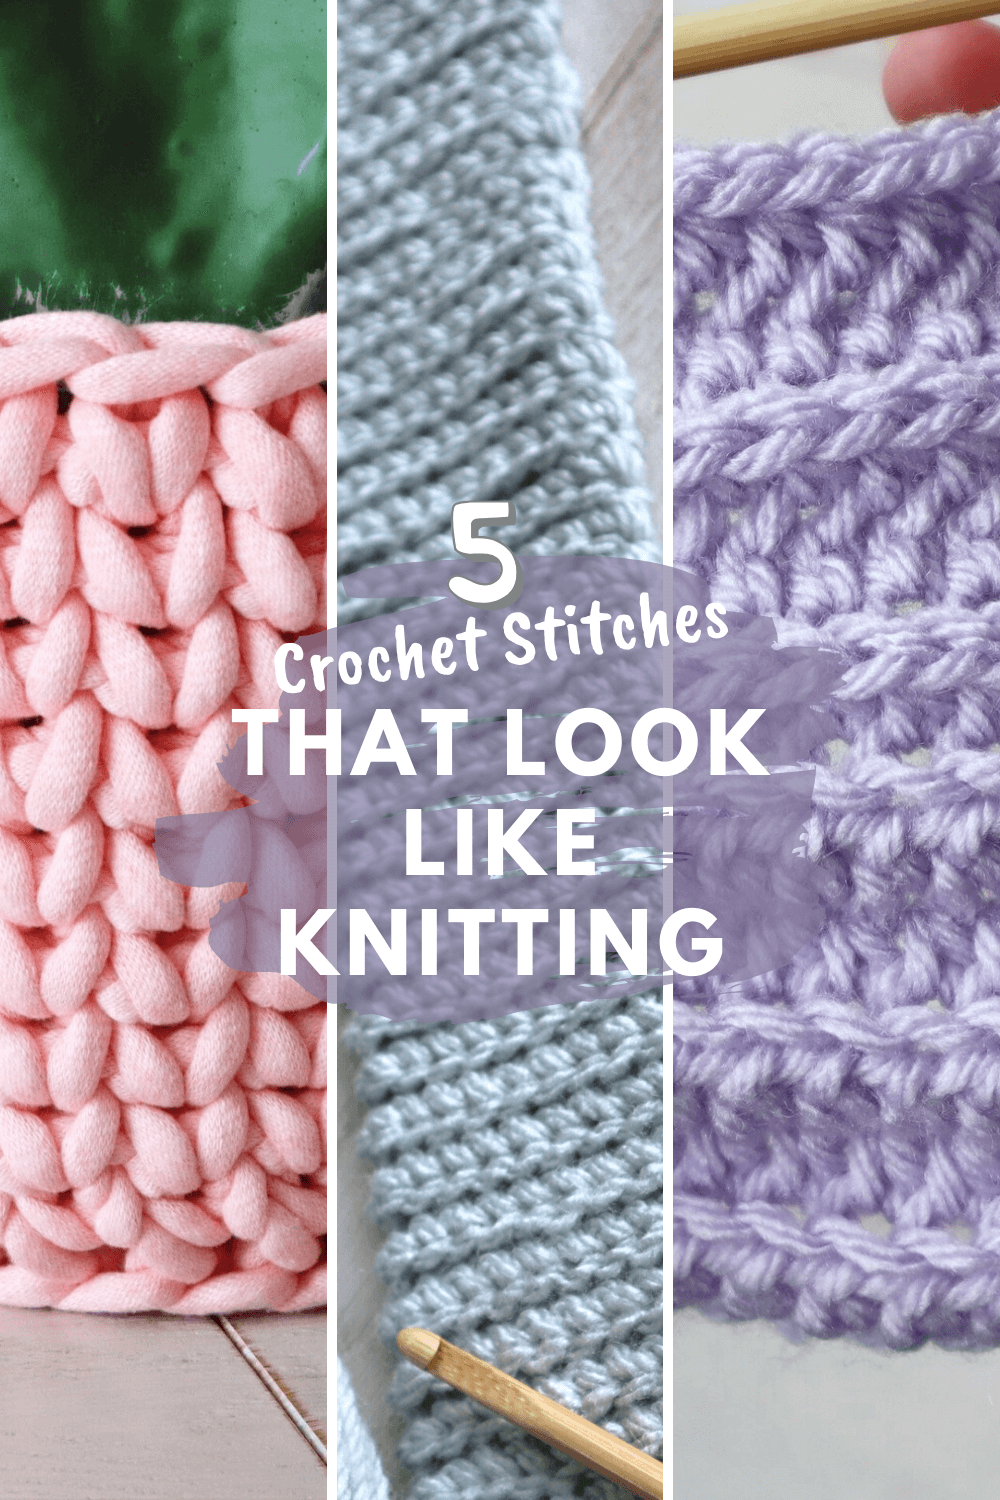 The Vertical Basket Weave Knitting Pattern Knitting And Crochet